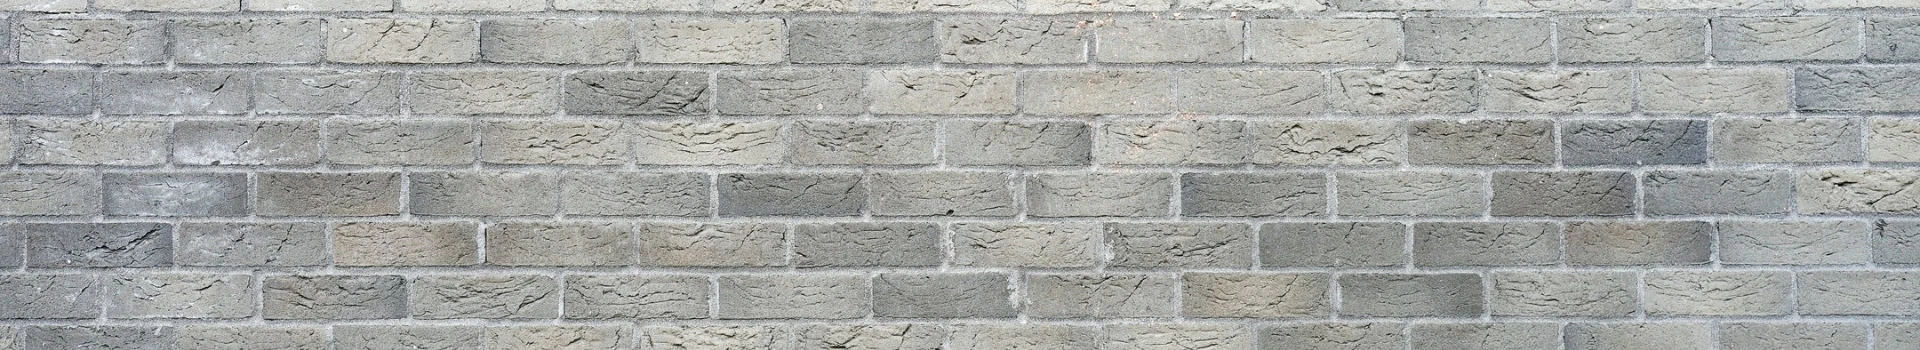 betonowe cegły